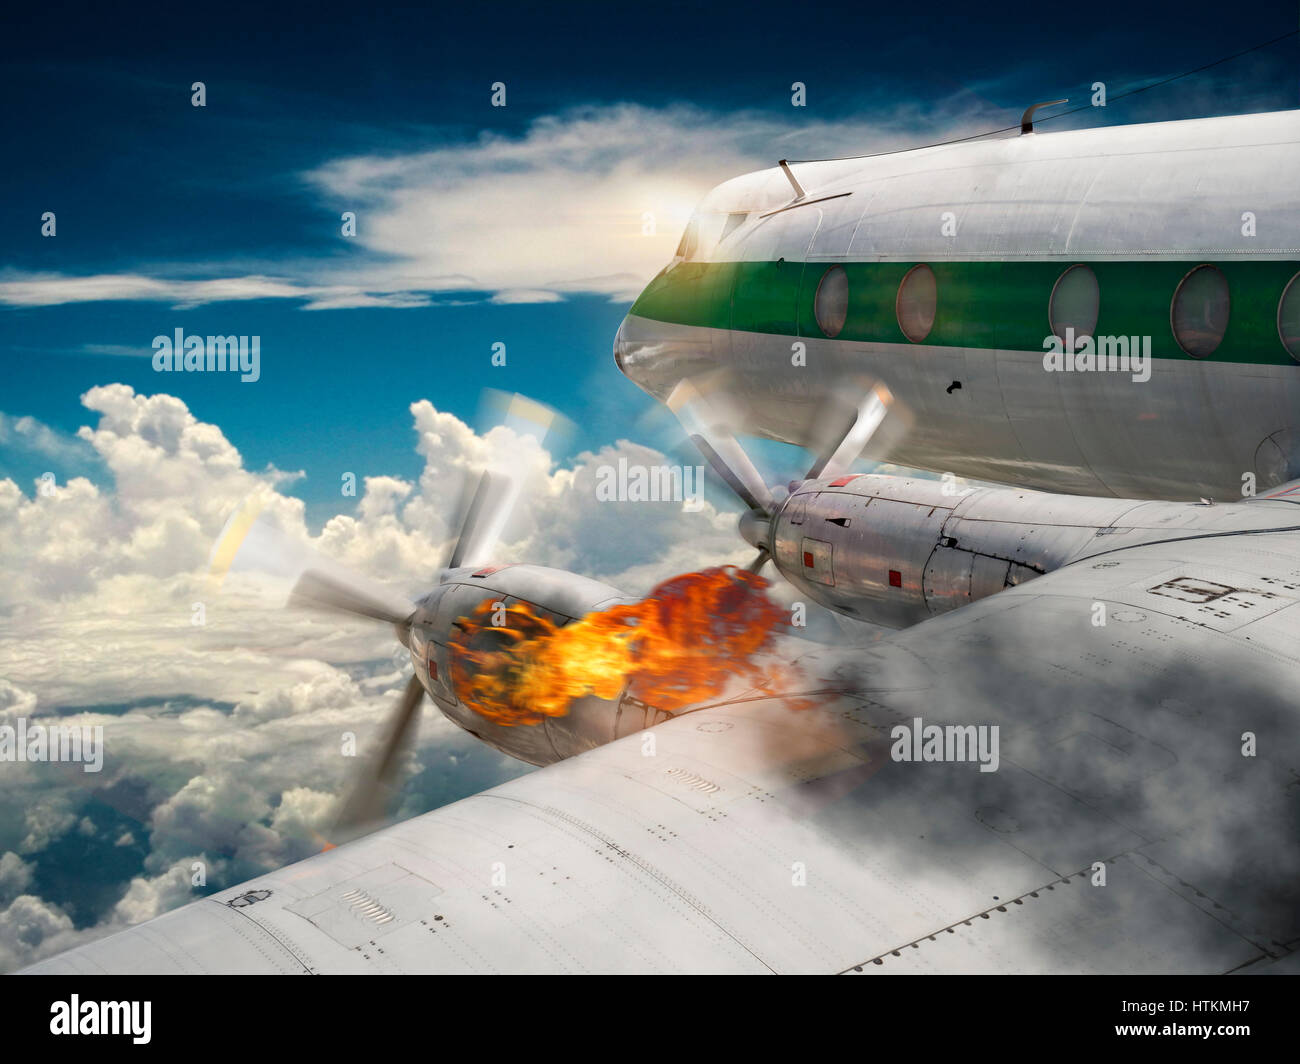 Airplane with burning engine Stock Photo